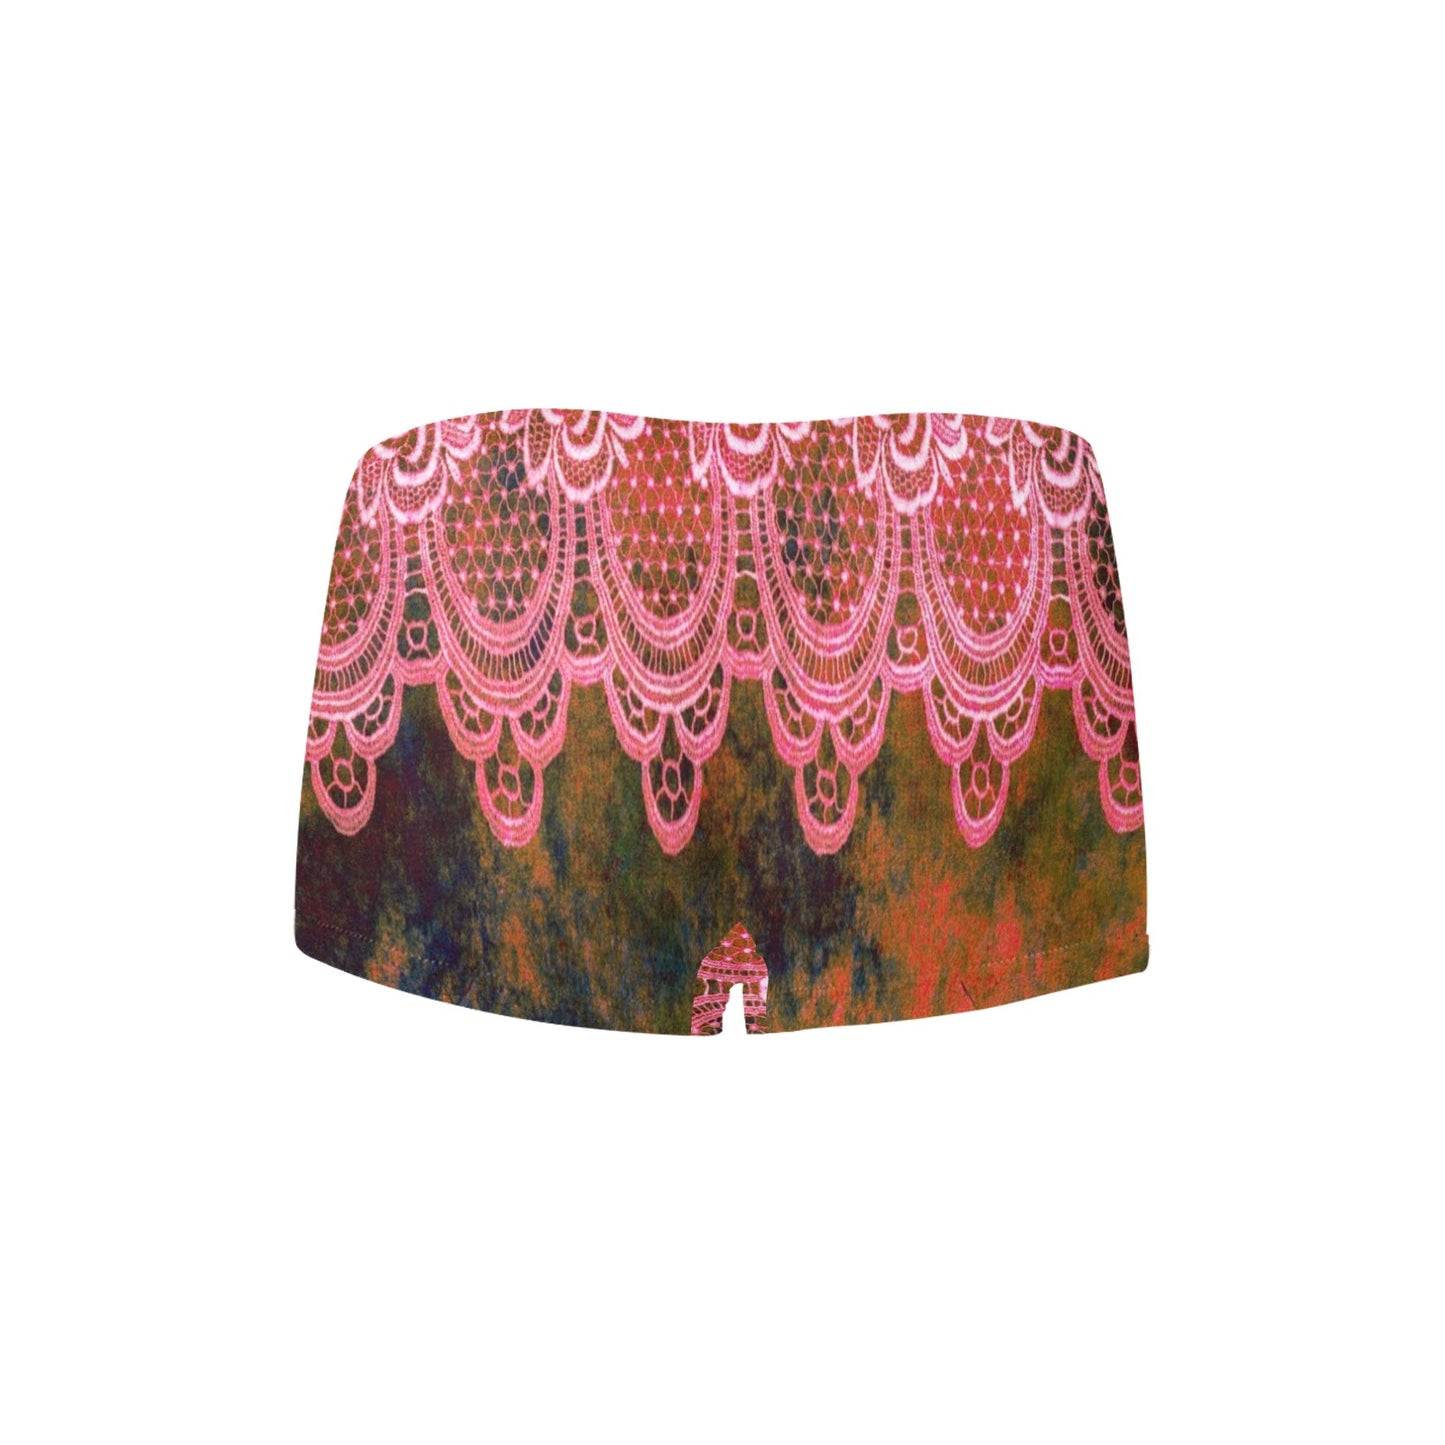 Printed Lace Boyshorts, daisy dukes, pum pum shorts, shortie shorts , design 32